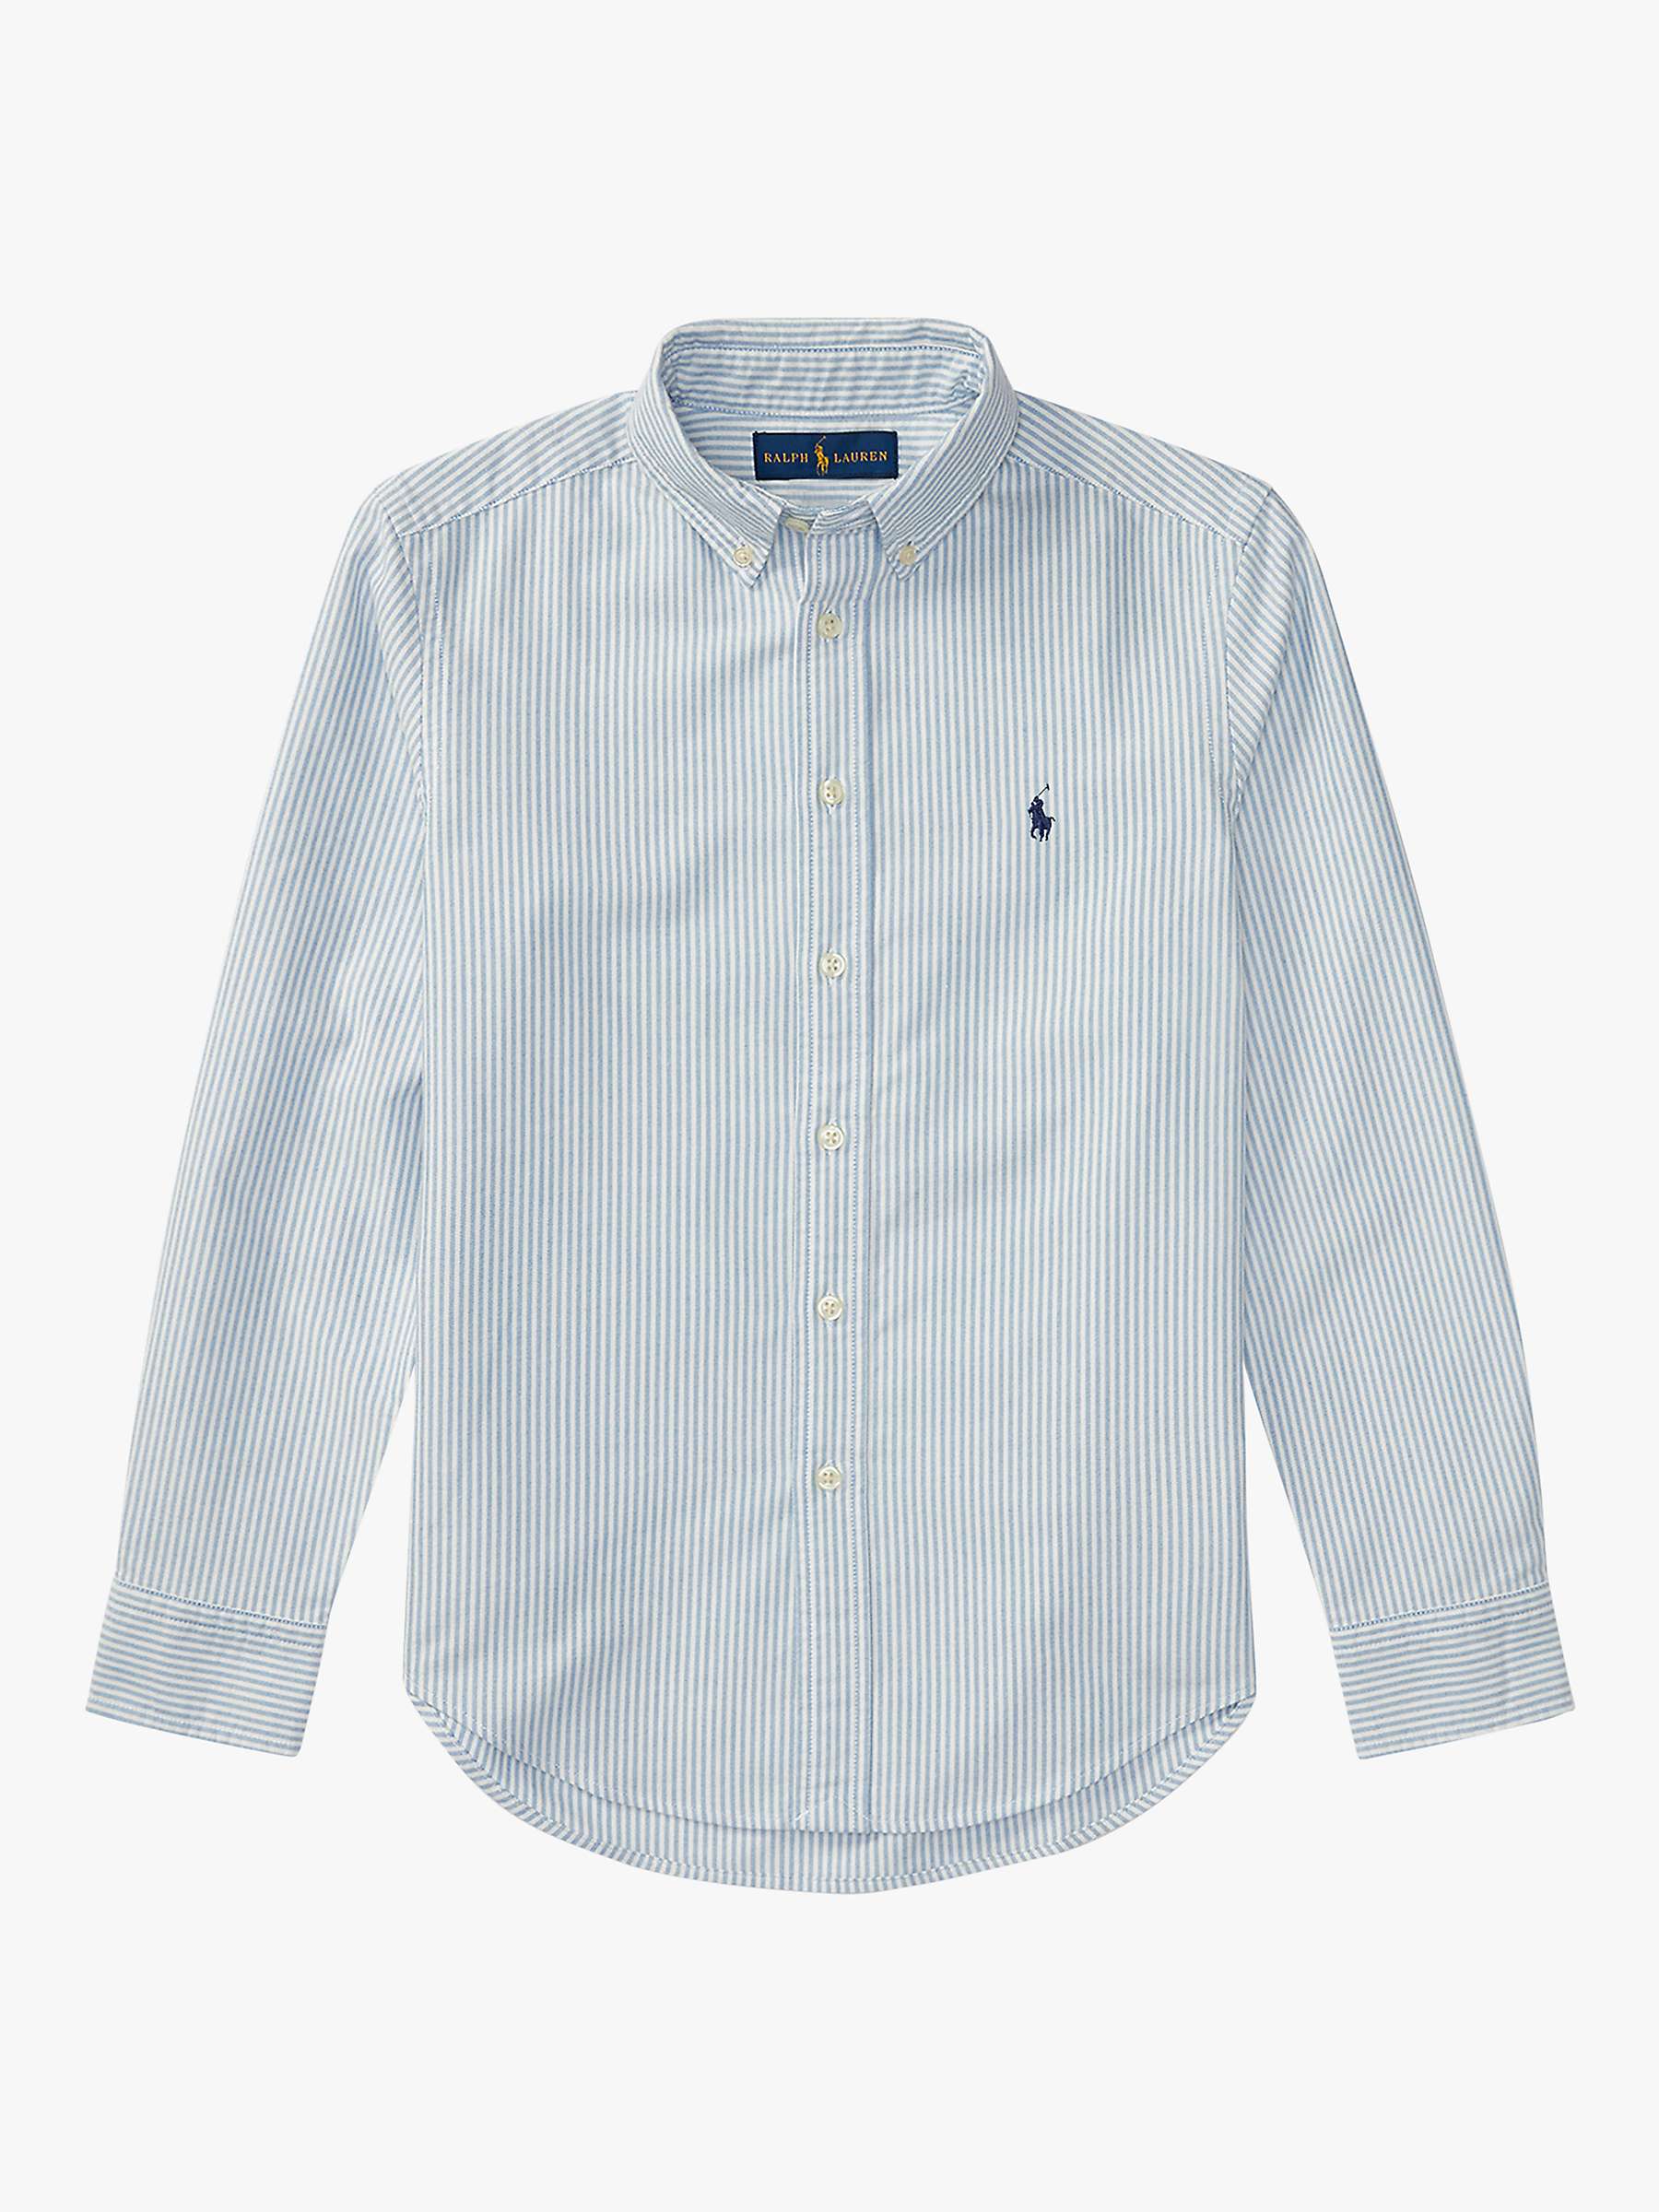 Buy Polo Ralph Lauren Kids' Pinstripe Oxford Shirt, Blue Online at johnlewis.com